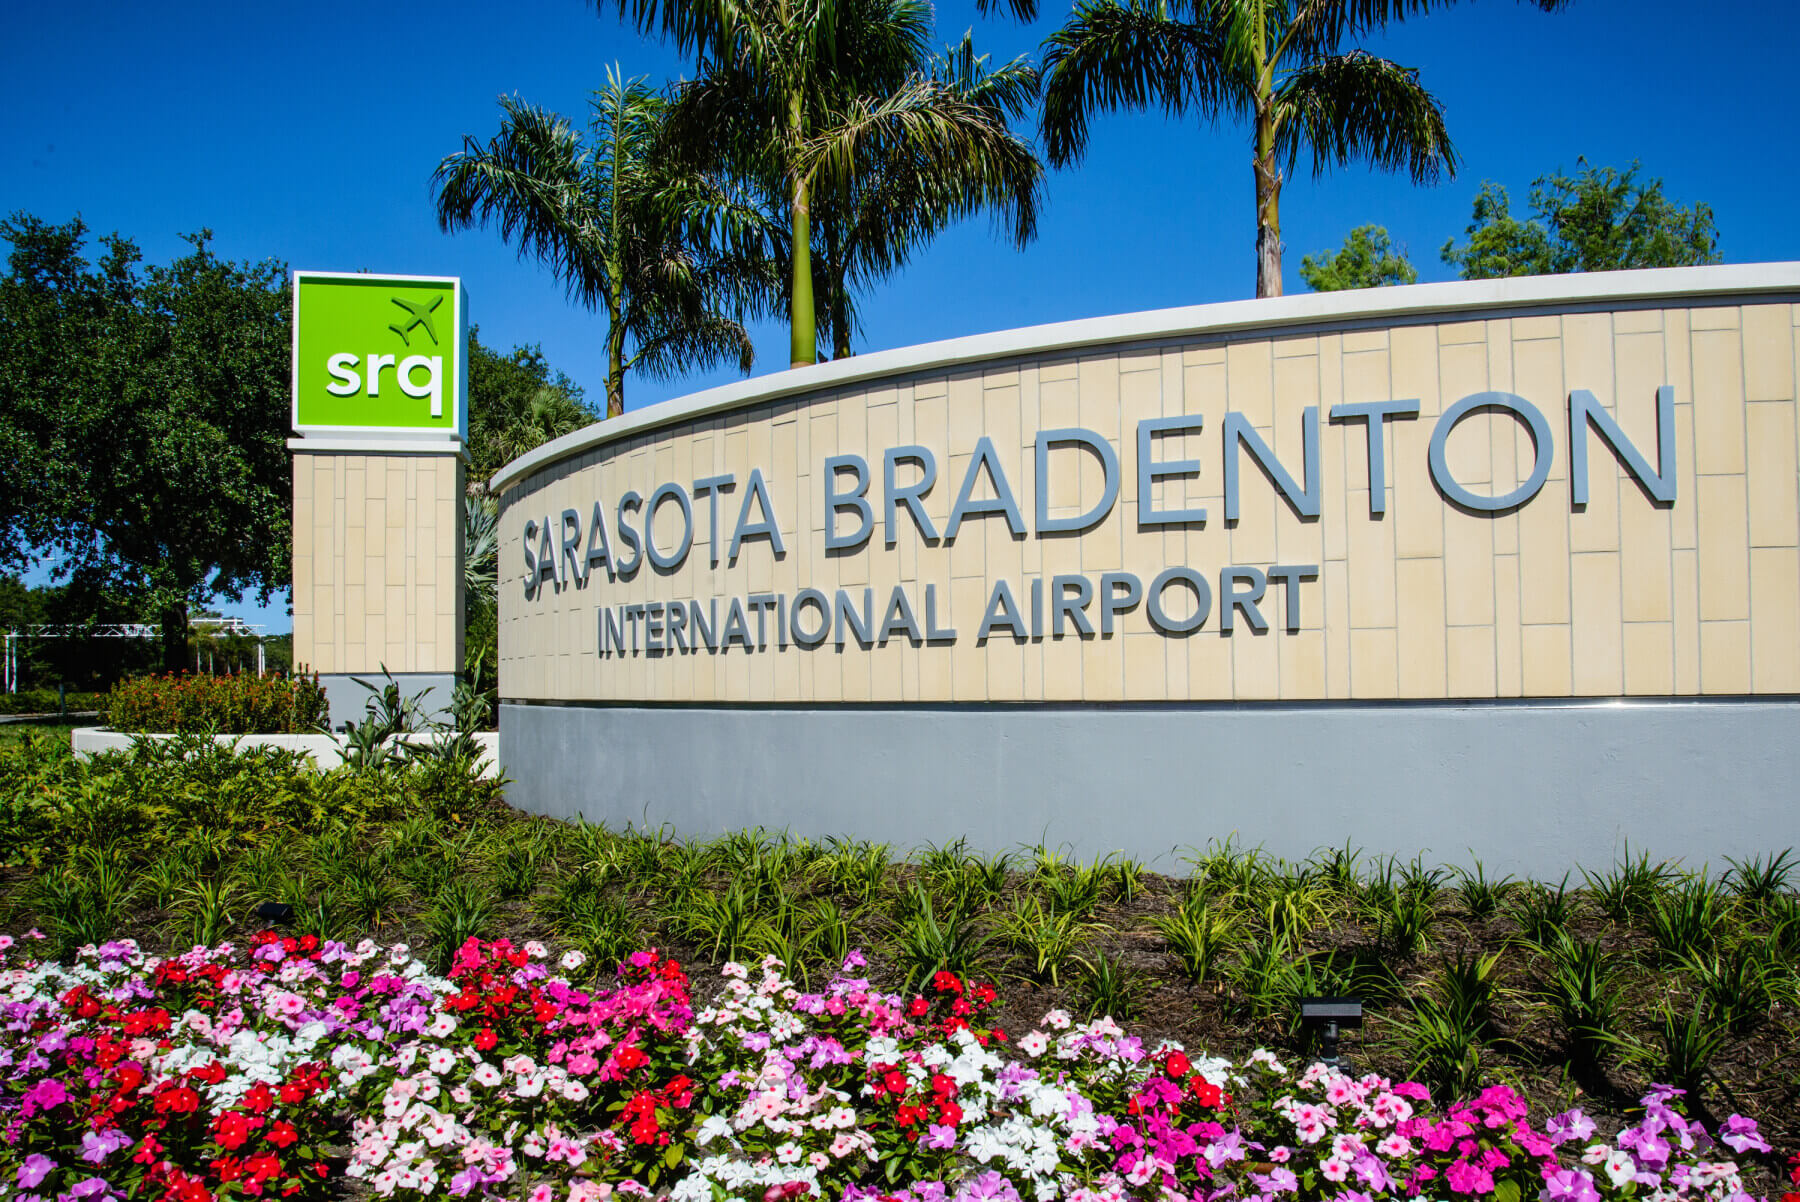 the sign at the main roadway entrance to Sarasota Bradenton International Airport